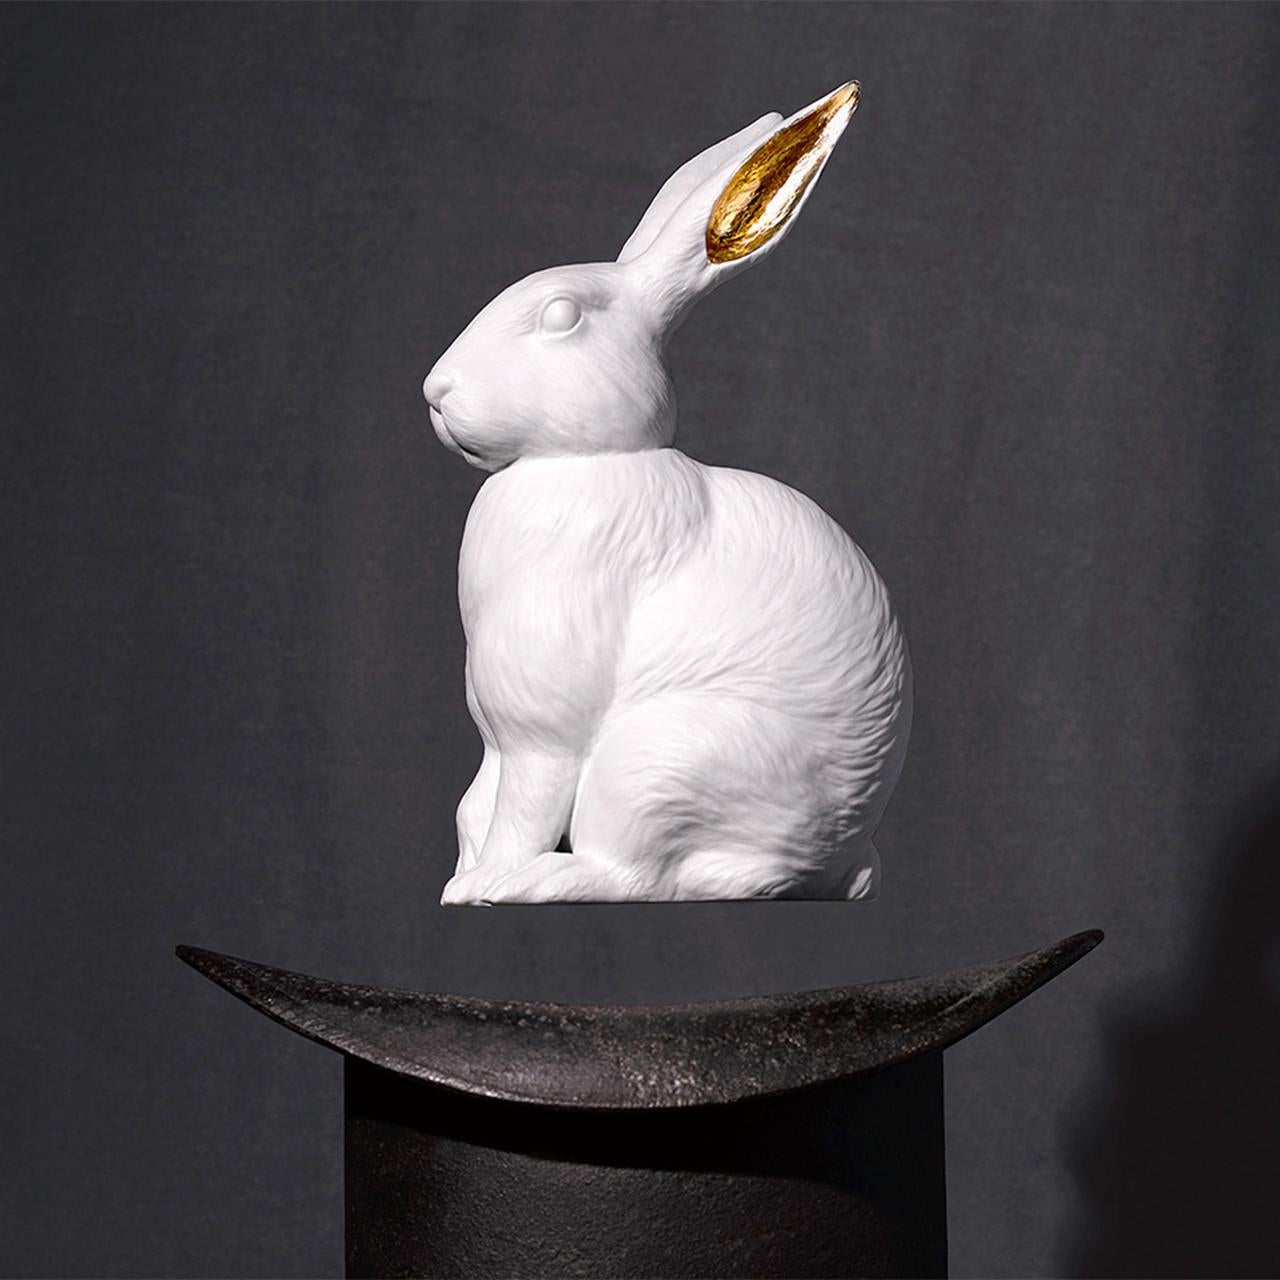 Hand-Crafted White Rabbit Sculpture